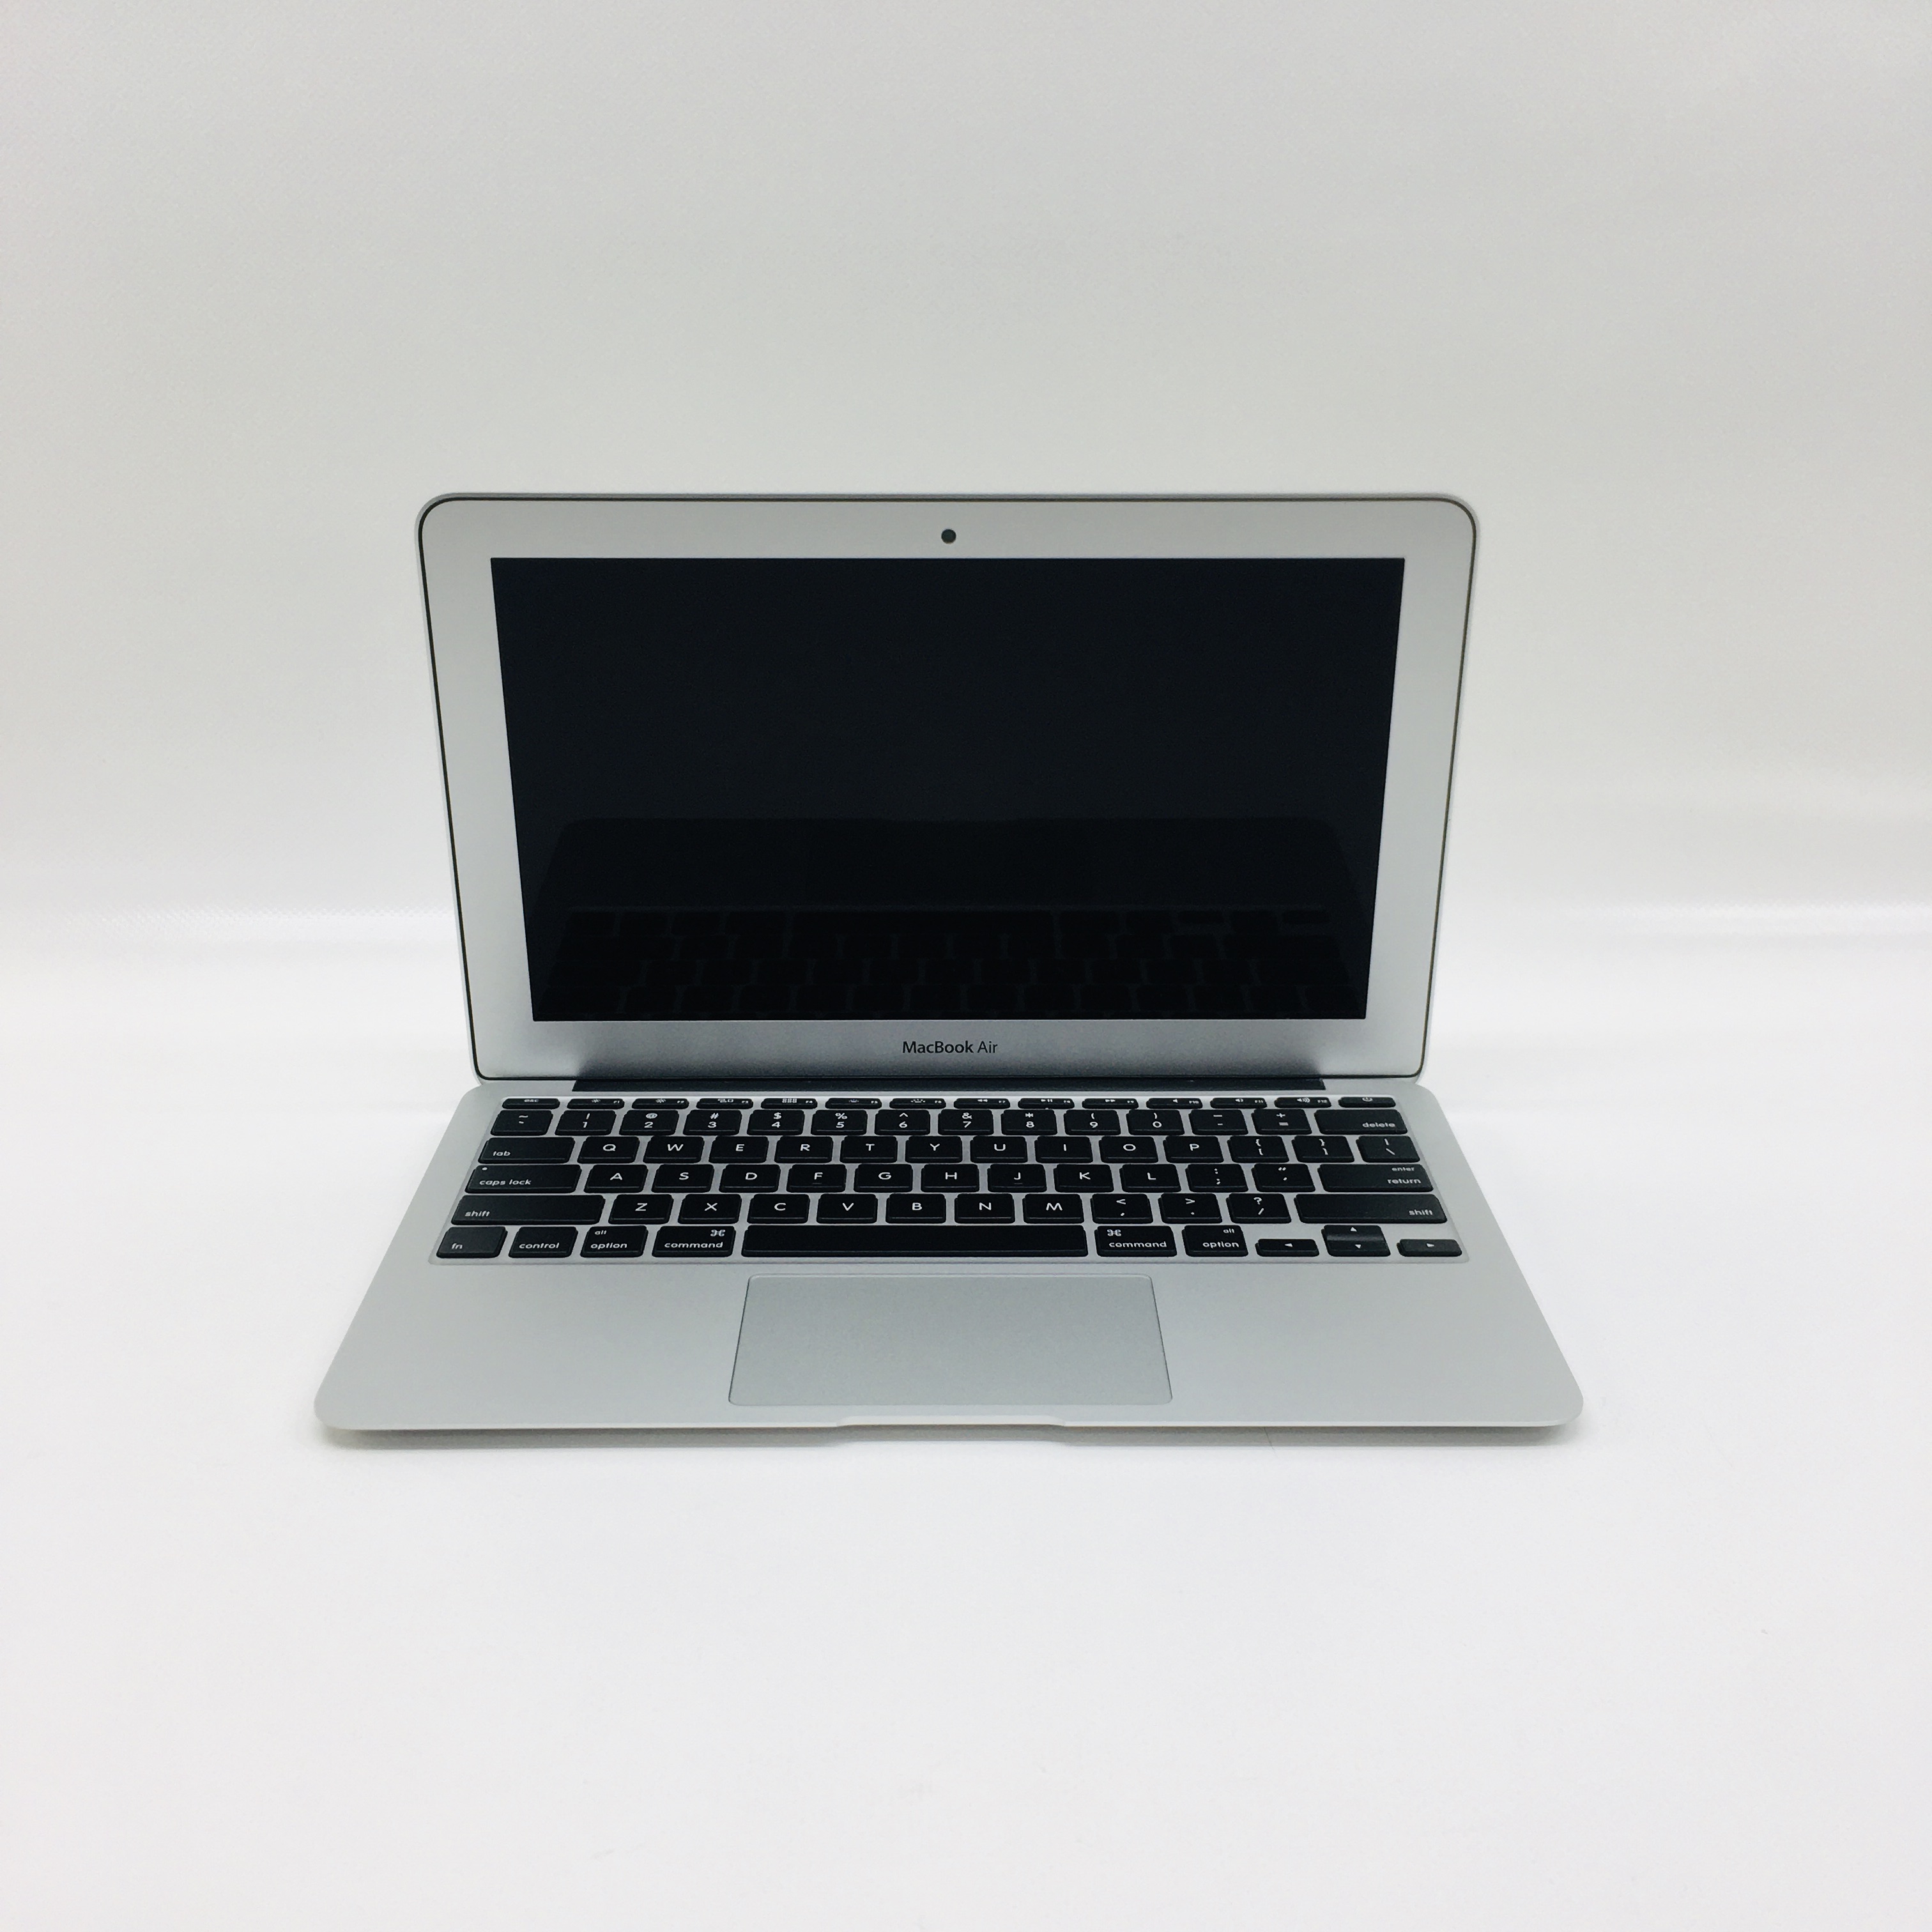 MacBook Air 11" Early 2015 (Intel Core i5 1.6 GHz 4 GB RAM 512 GB SSD), Intel Core i5 1.6 GHz, 4 GB RAM, 512 GB SSD, image 1